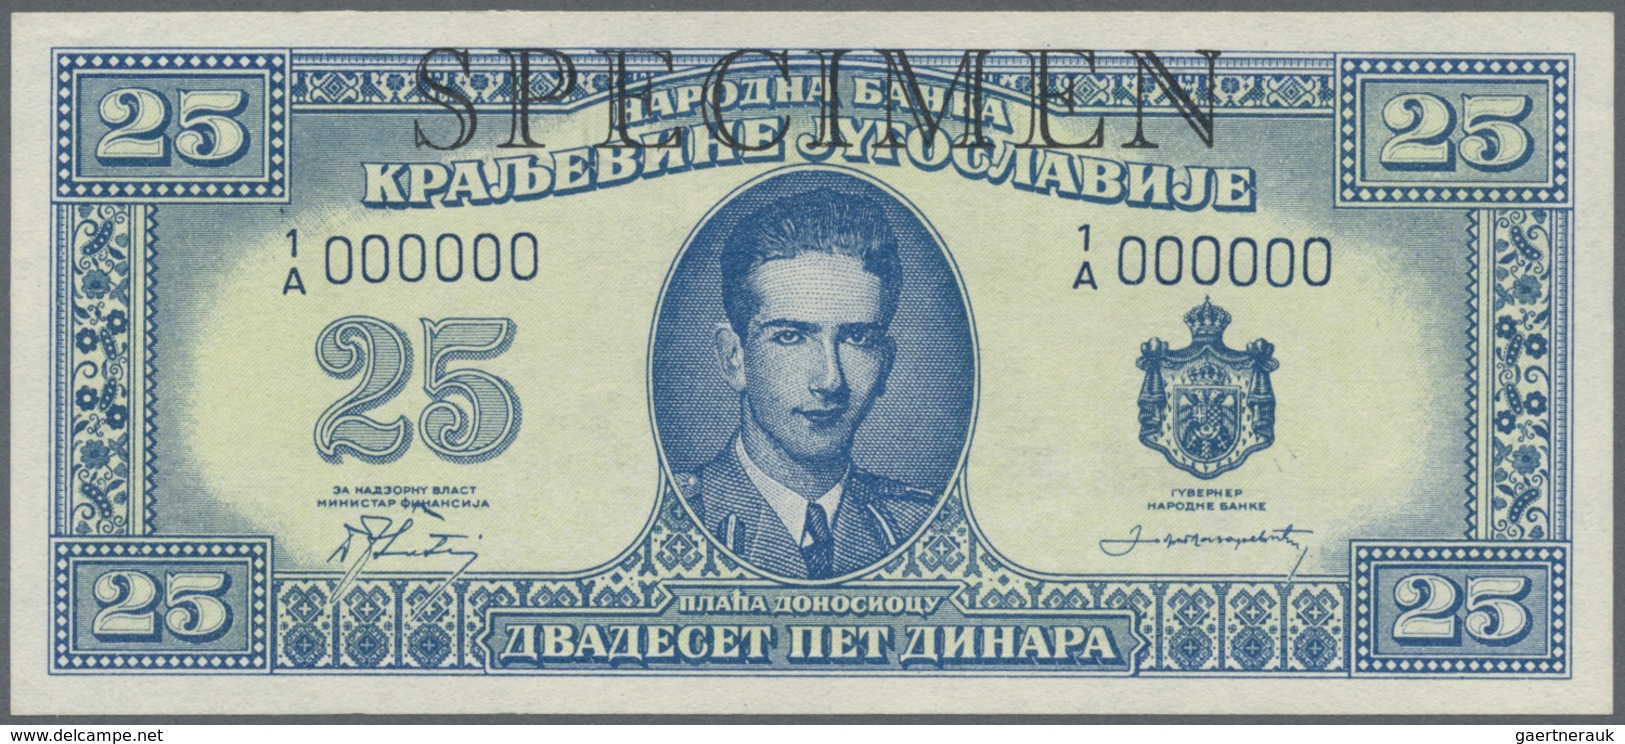 Yugoslavia / Jugoslavien: Not issued Banknote 5 Dinara series 1943 Specimen, P.35As, in perfect UNC